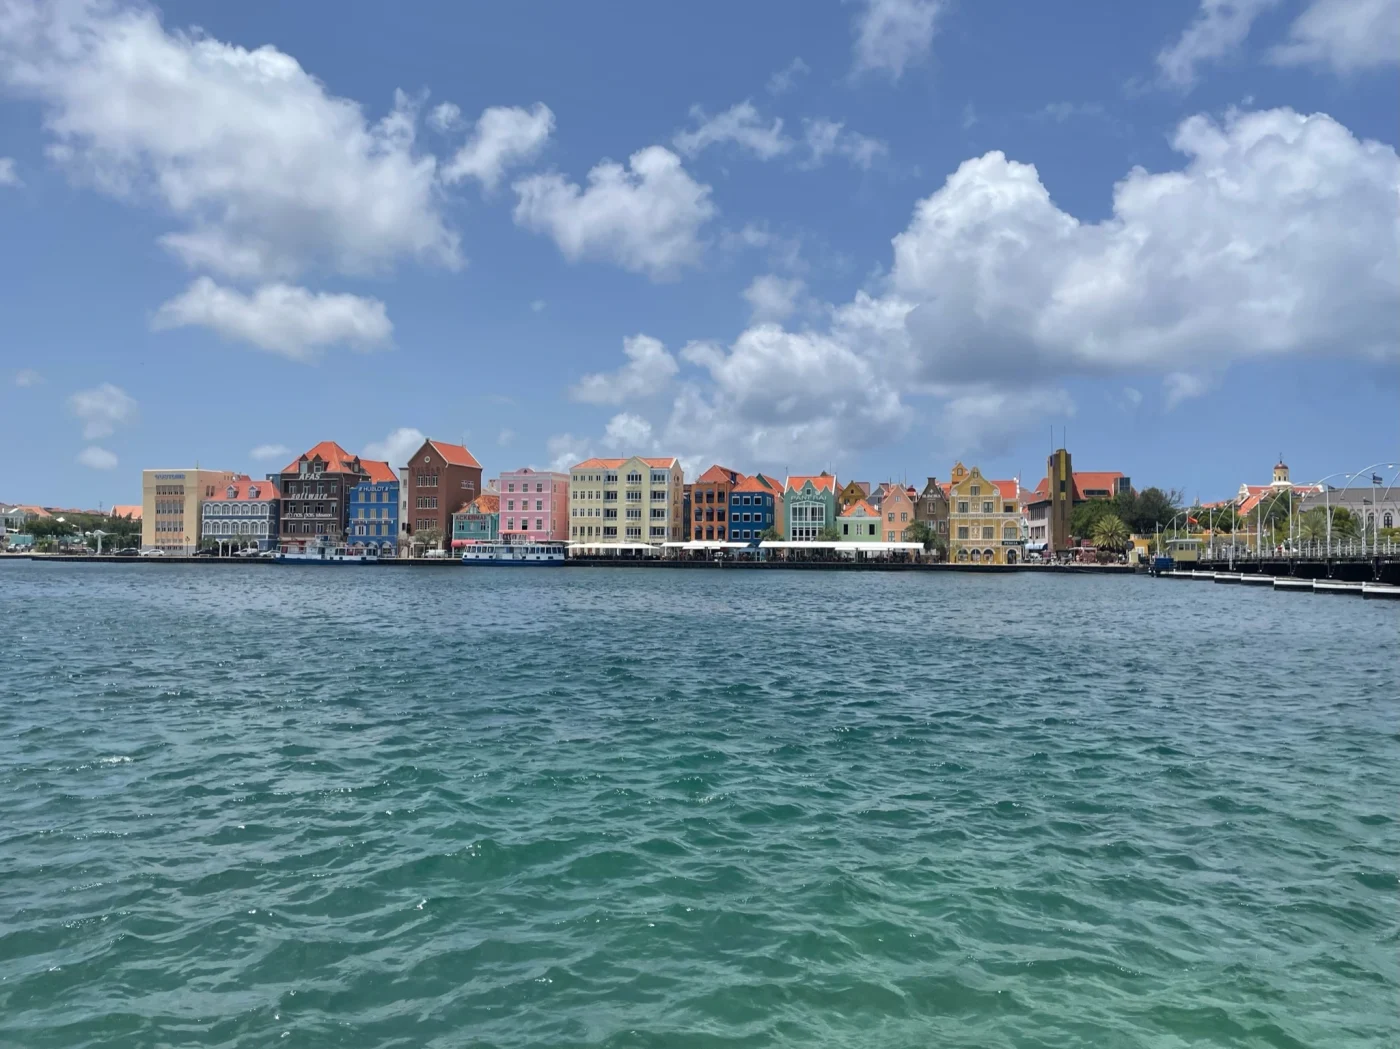 Curaçao Cruise Port Where do cruise ships dock?